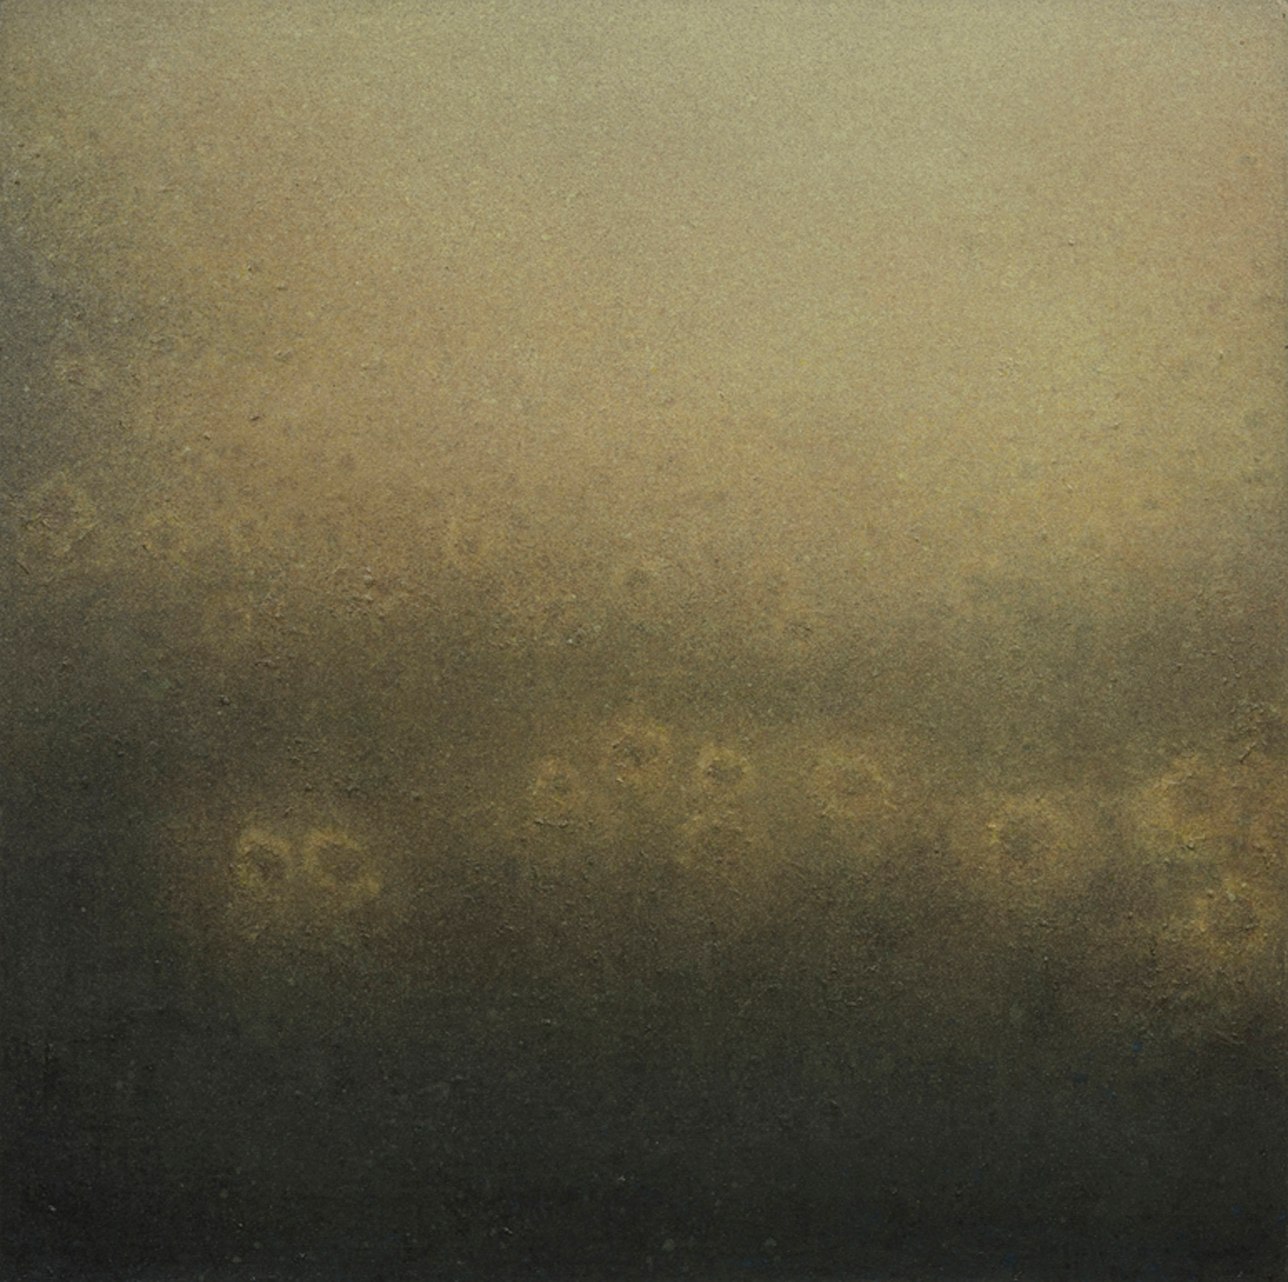 Wang Fengge 王凤鸽 (b. 1982), Sunflower Sea 葵海, 2012